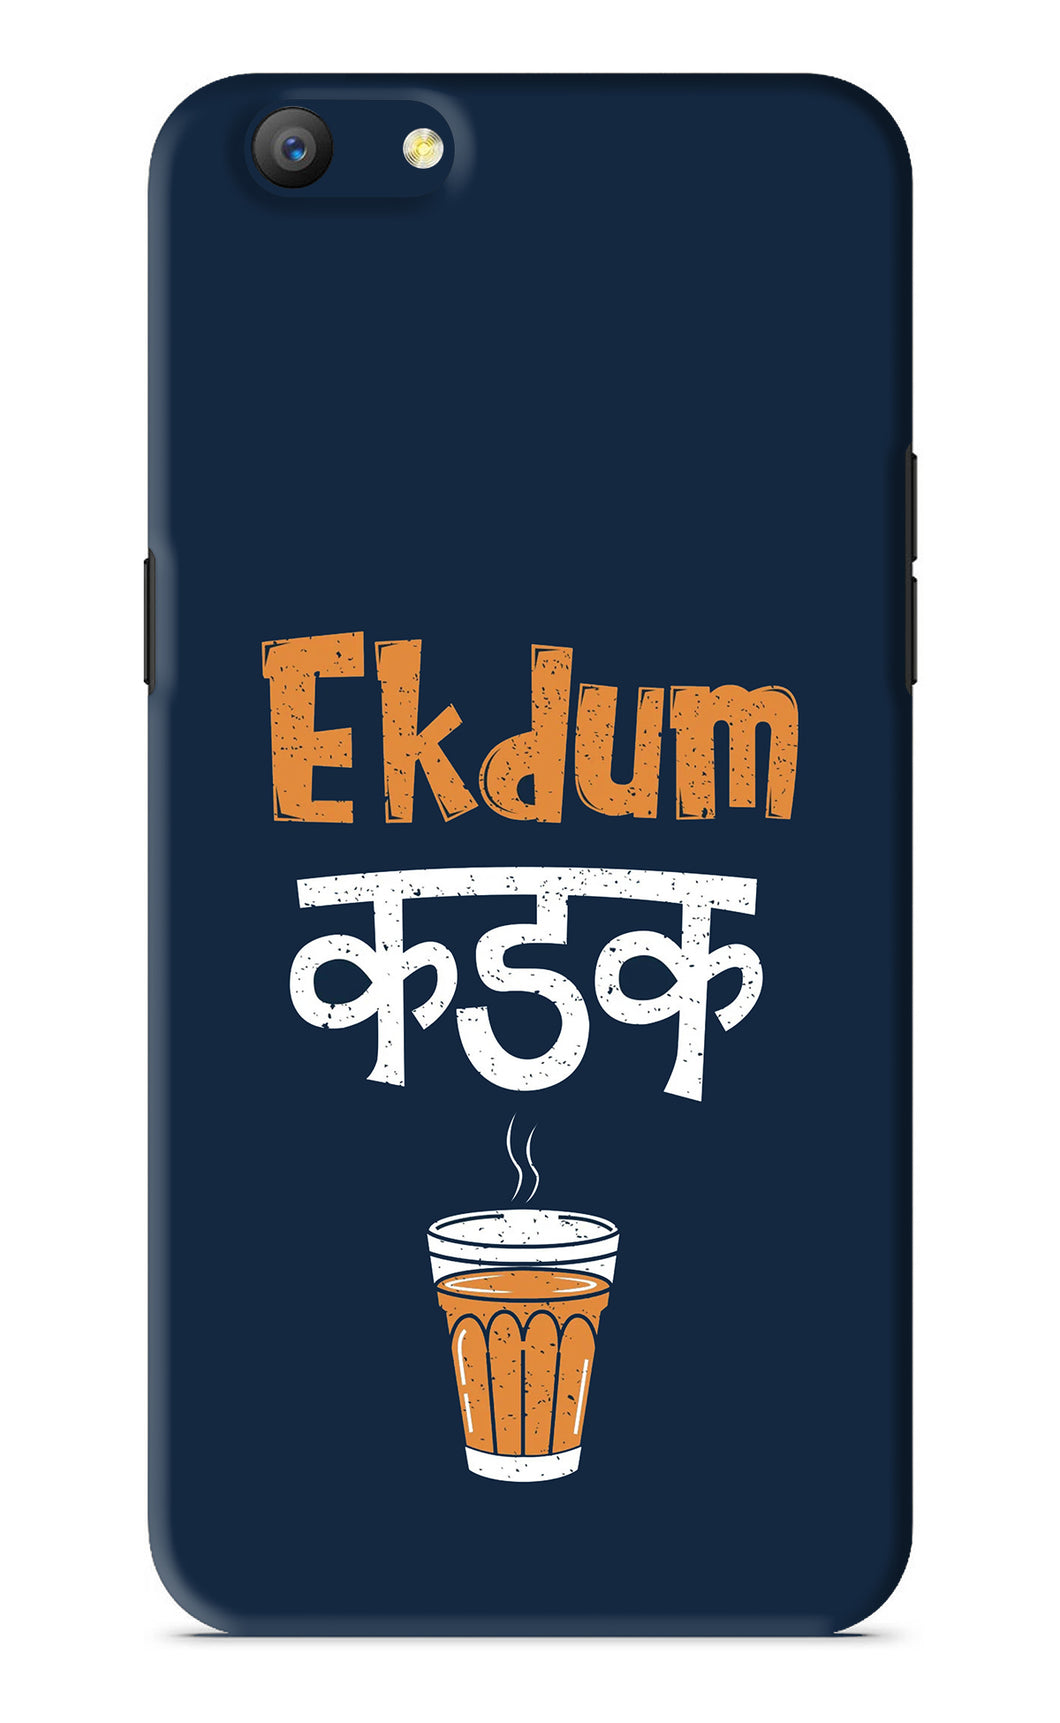 Ekdum Kadak Chai Oppo A57 Back Skin Wrap